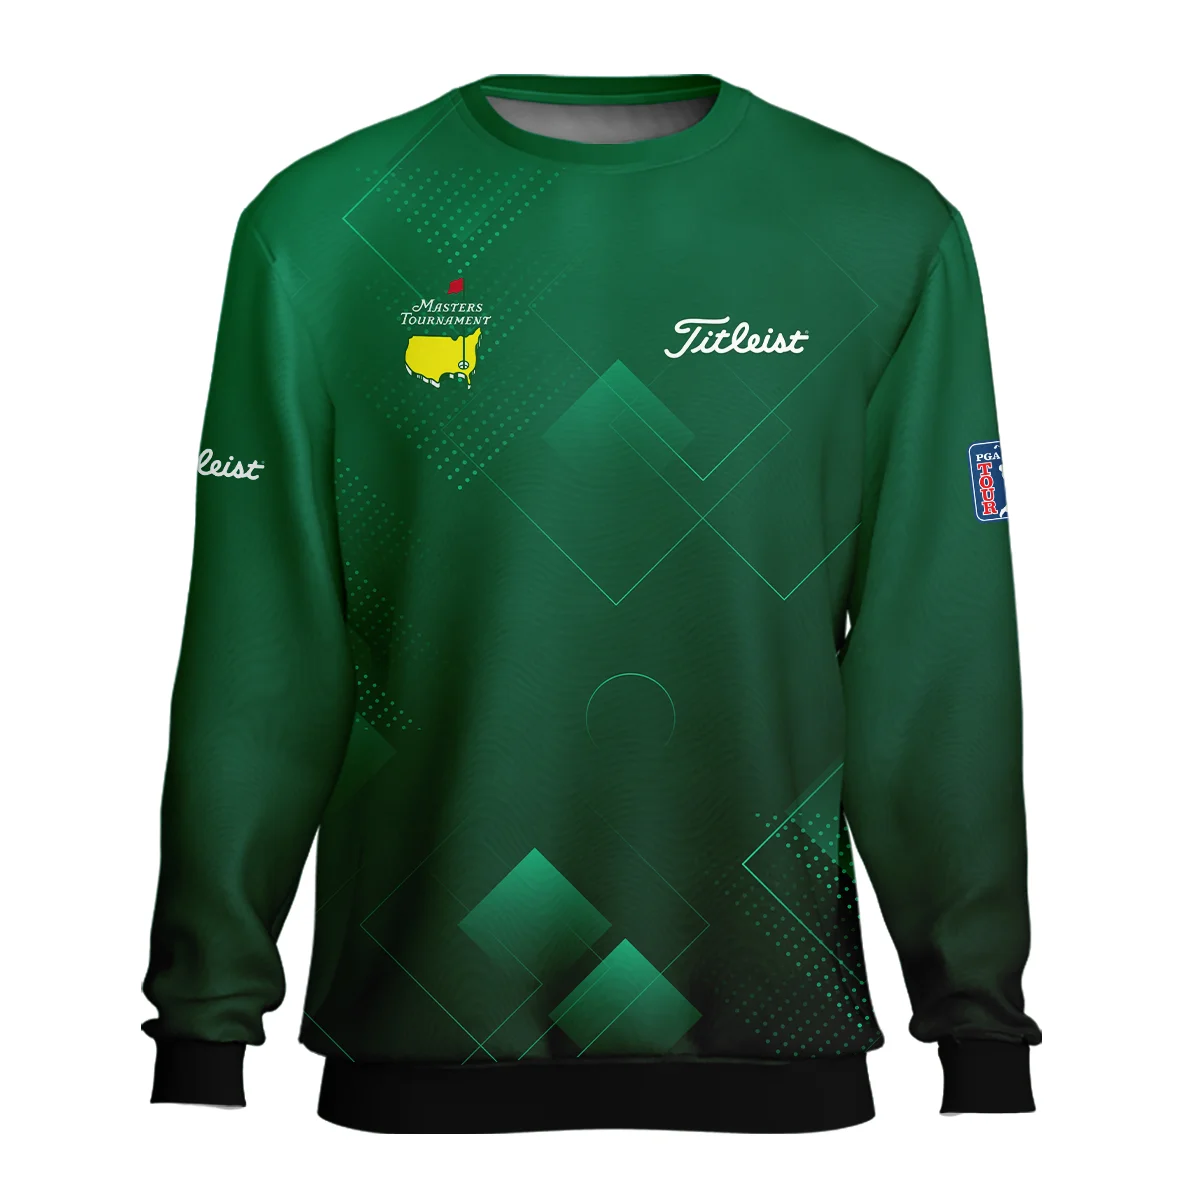 Masters Tournament Titleist Unisex Sweatshirt Golf Sports Green Abstract Geometric Sweatshirt